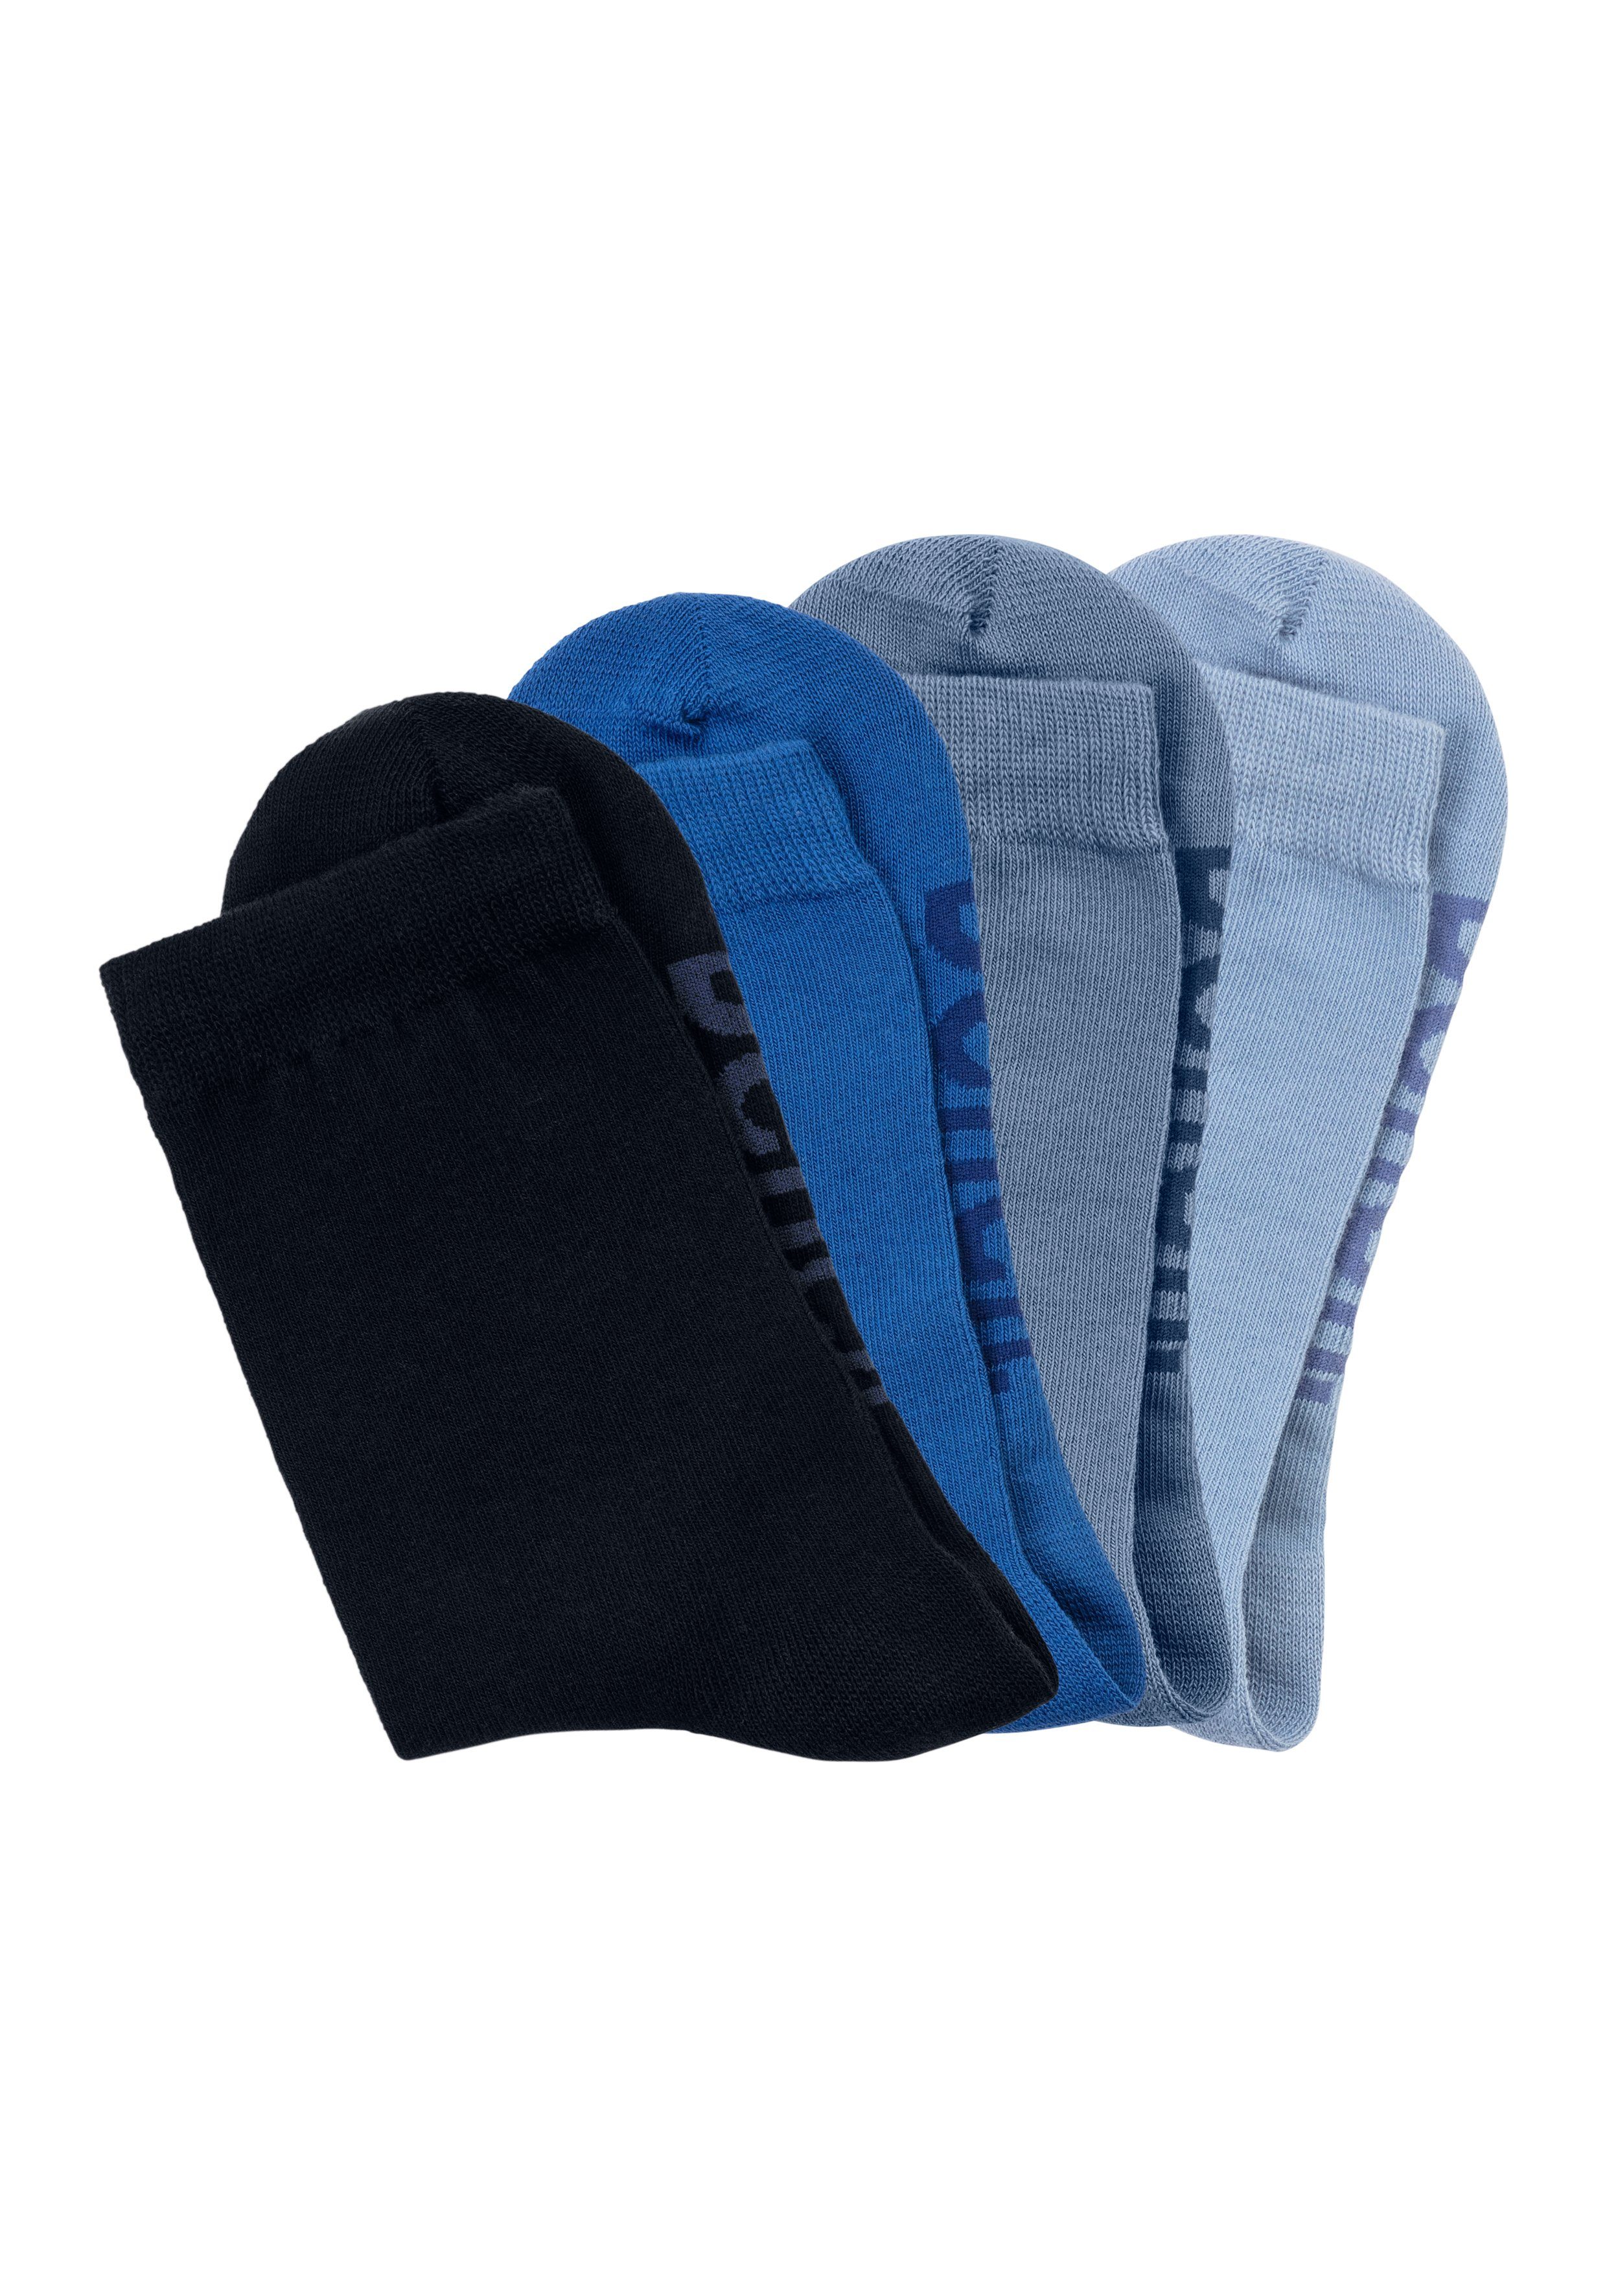 mit 1x blau, 1x jeans 4-Paar) 1x Bench. Basicsocken Innenbündchen farbigen 1x (Box, marine, blau, royal